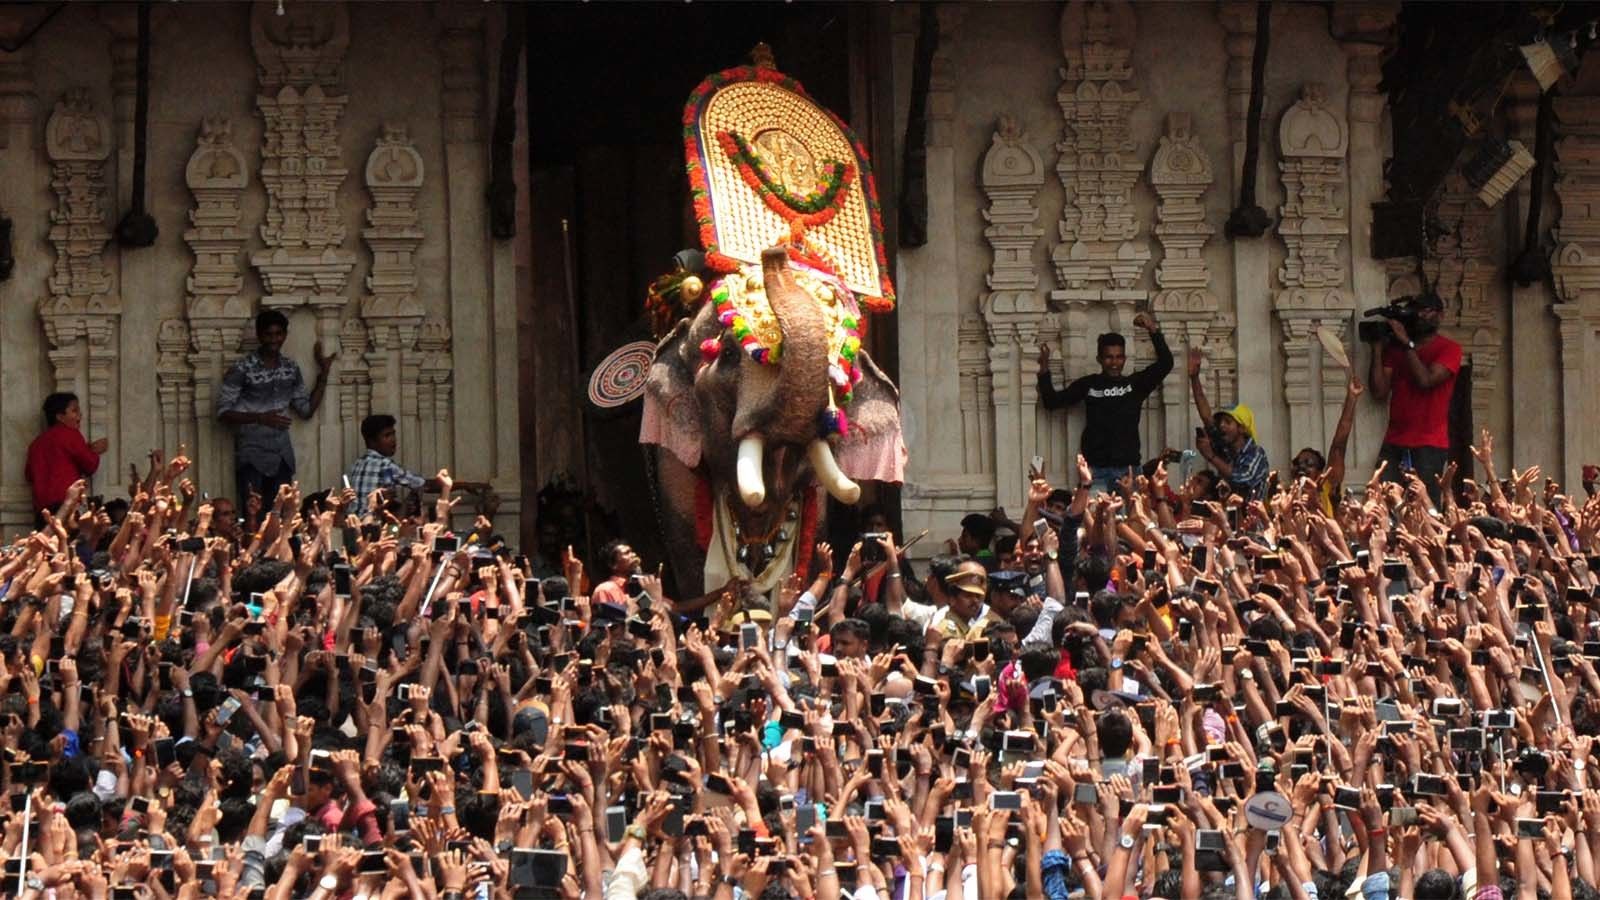 Kerala's star elephants are a 'jumbo' hit on the internet of India